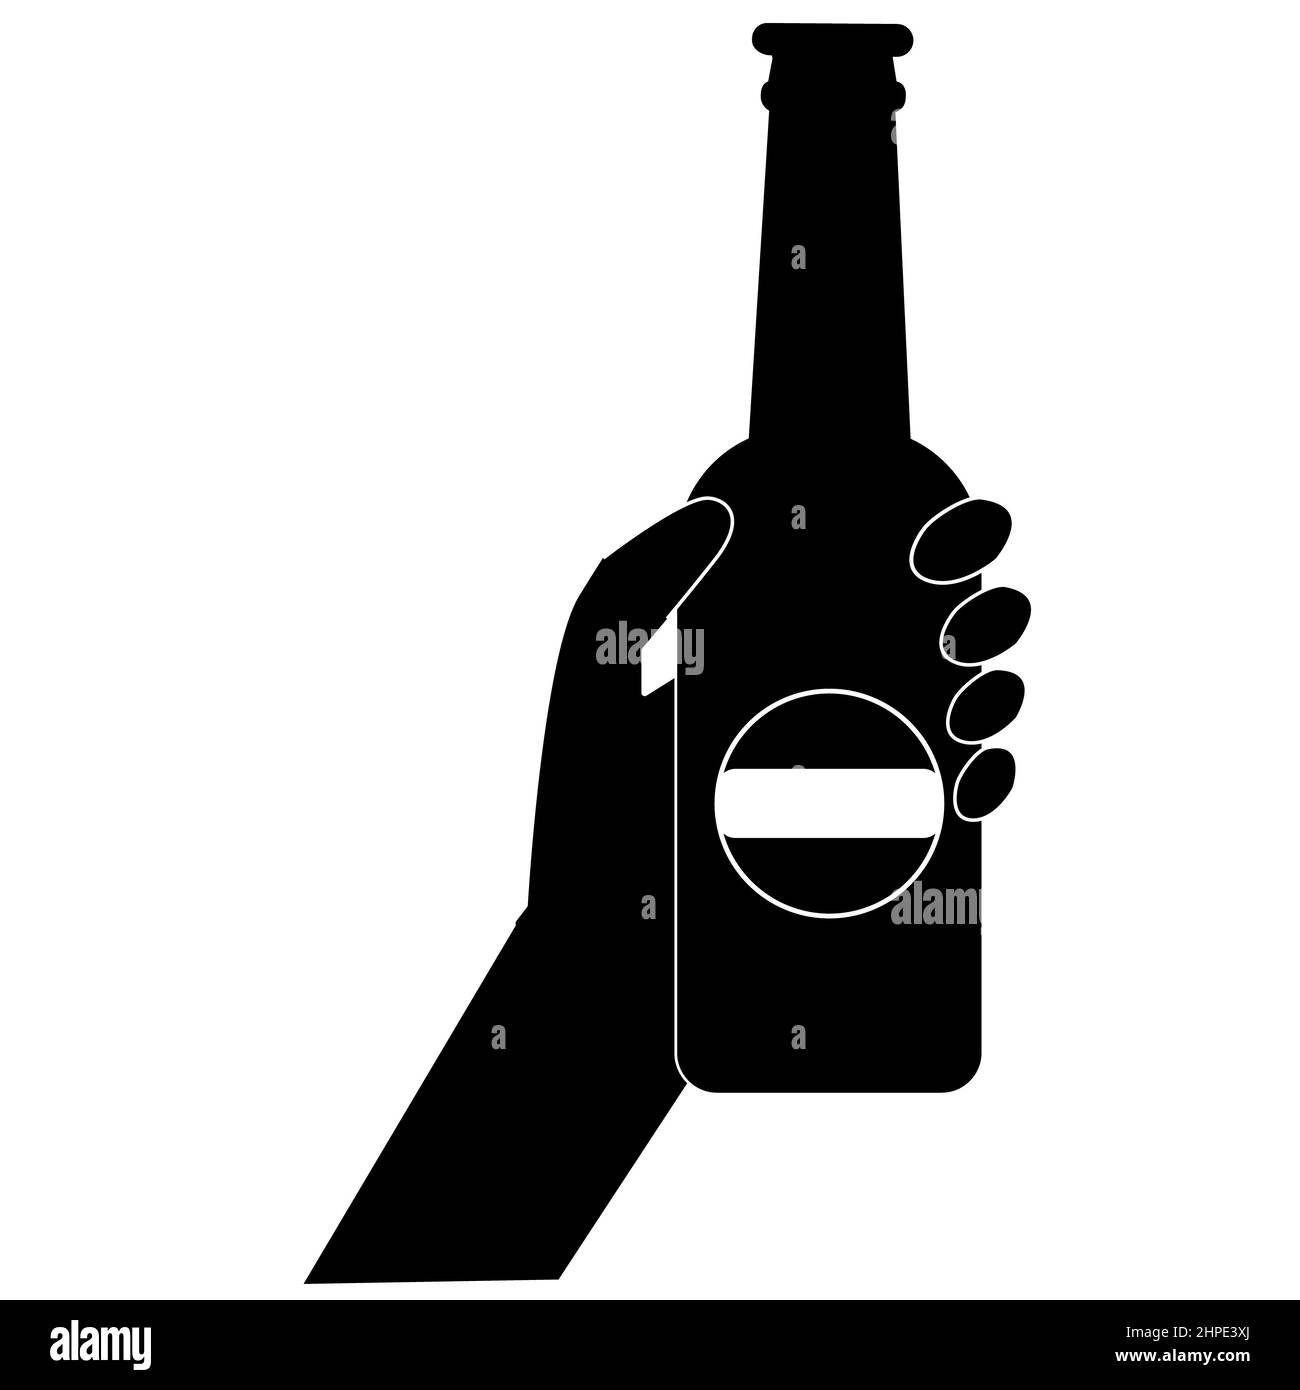 hand holding beer bottle icon on white background. drinking alcoholic beverages sign. flat style. Stock Photo